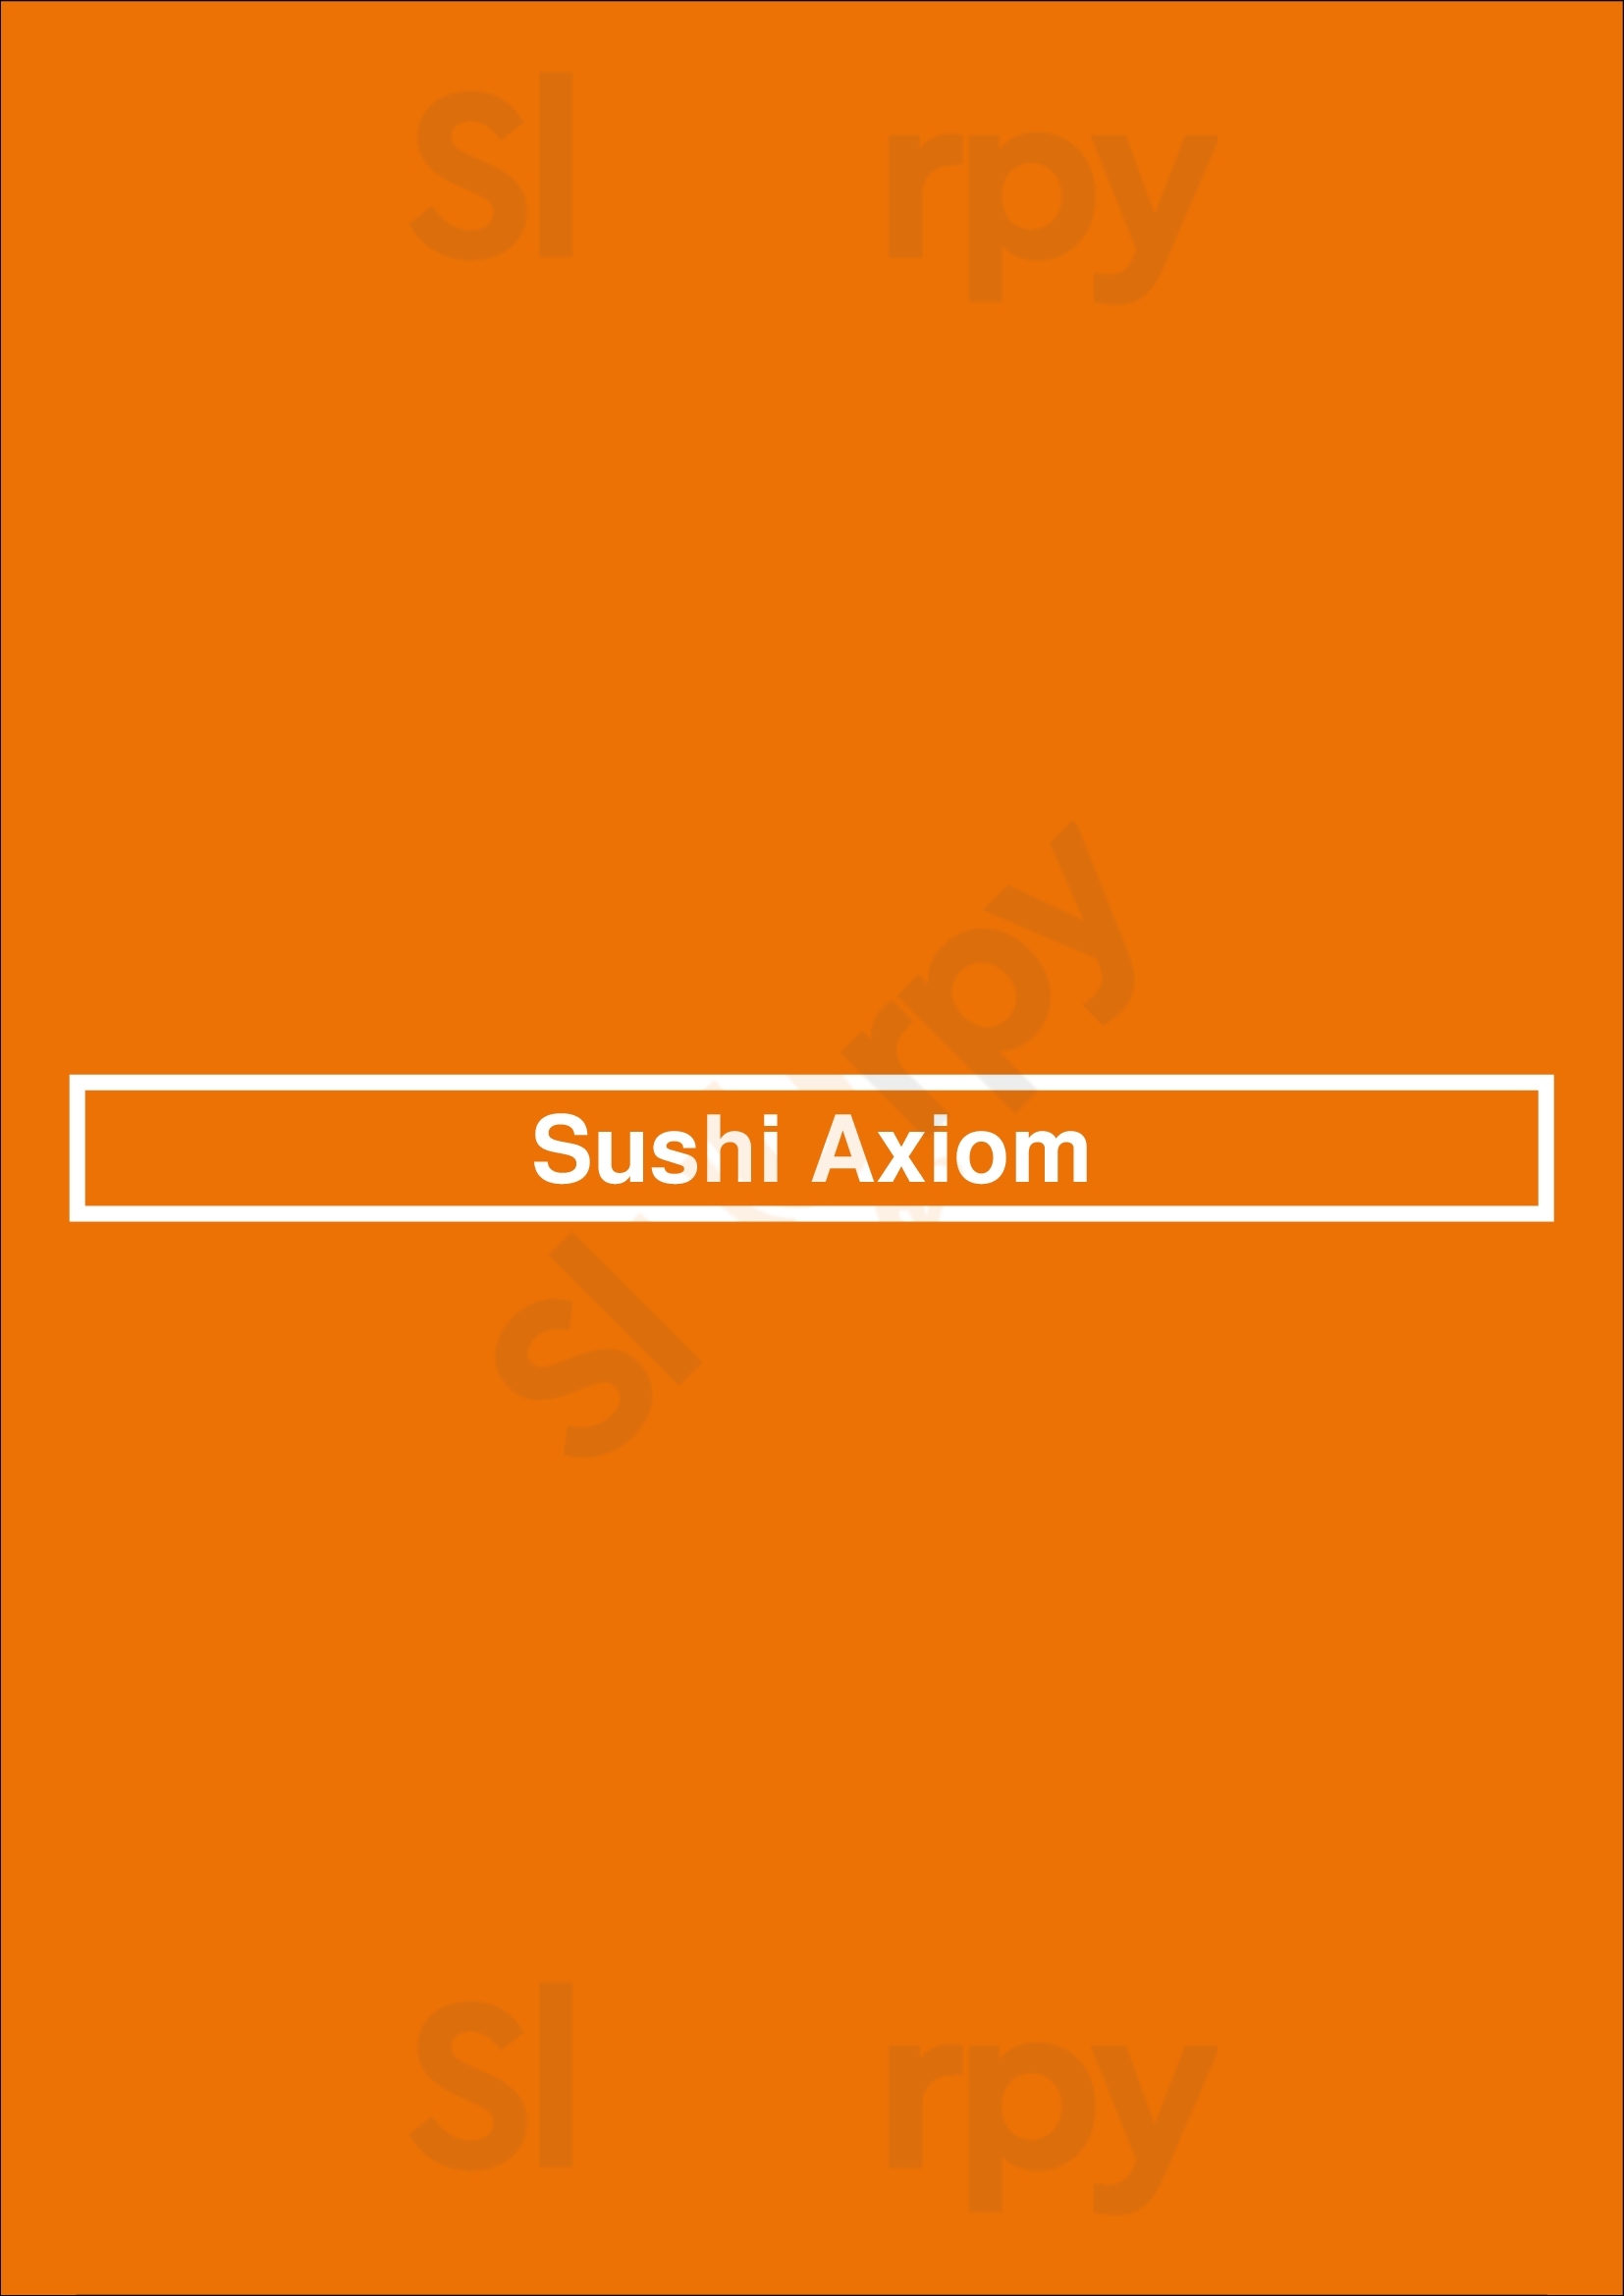 Sushi Axiom Dallas Menu - 1